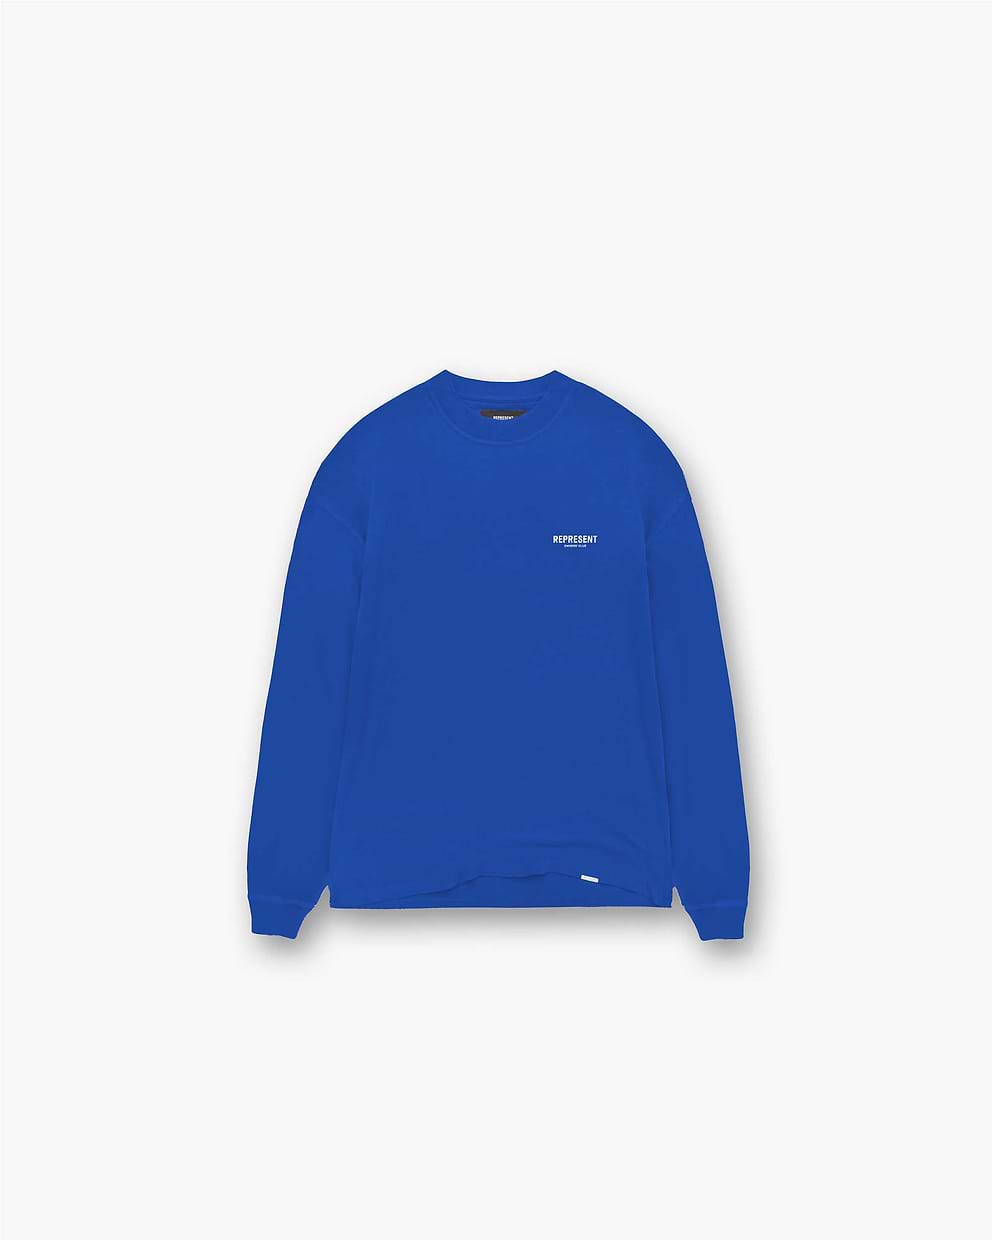 Represent Owners Club Long Sleeve T-Shirt - Cobalt